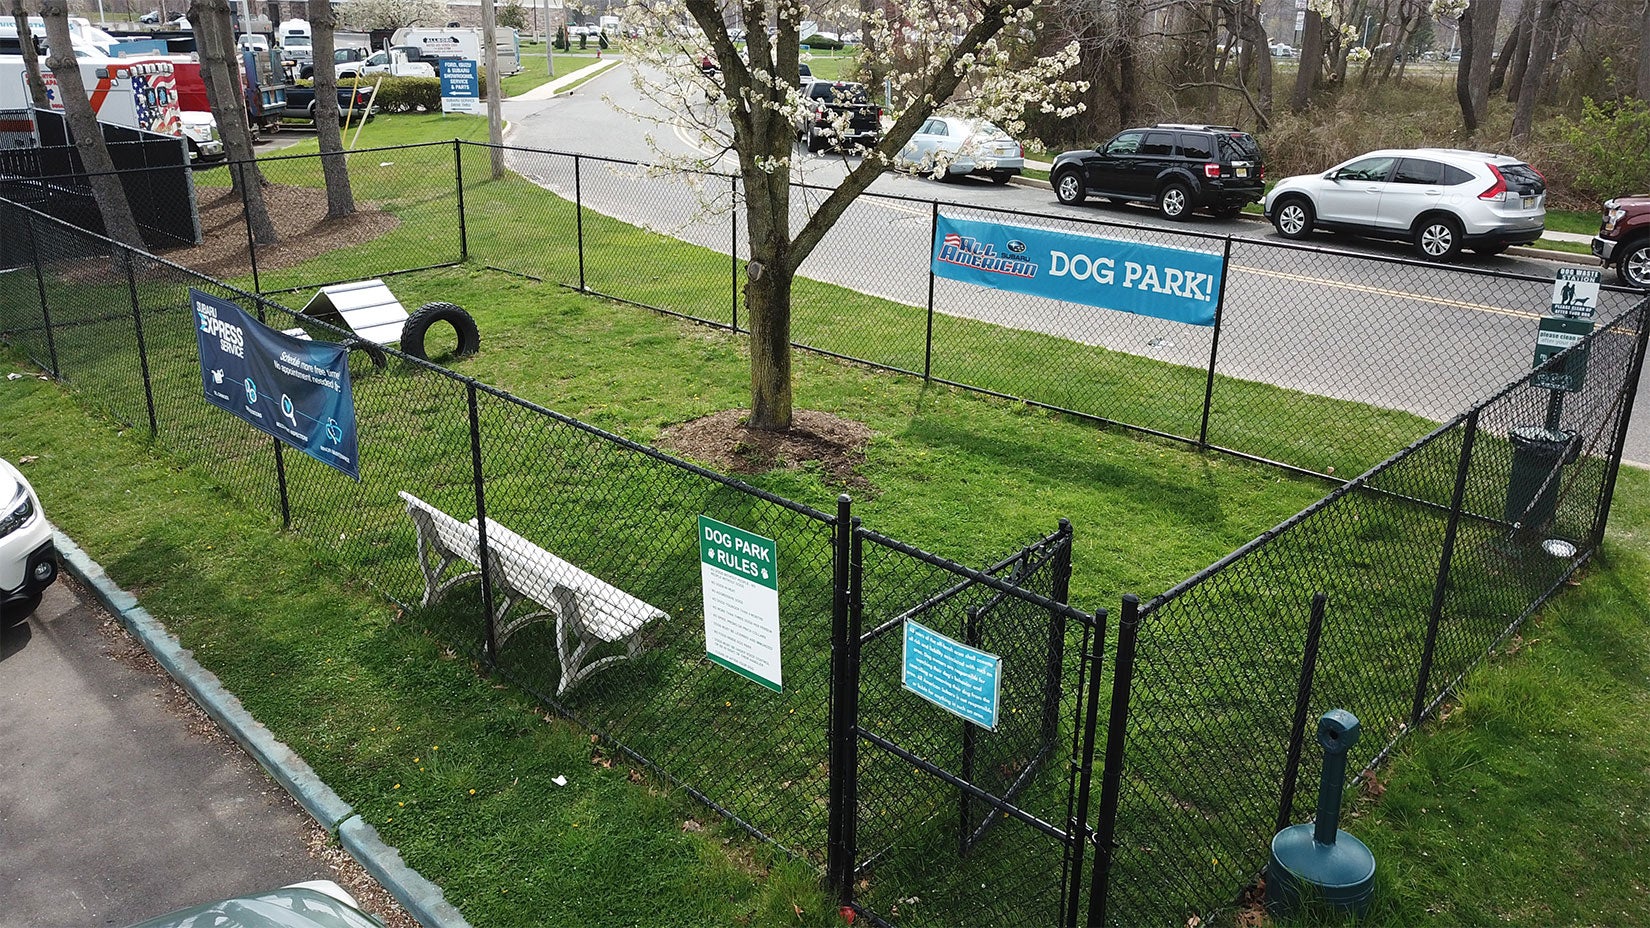 The All American Subaru Dog Park